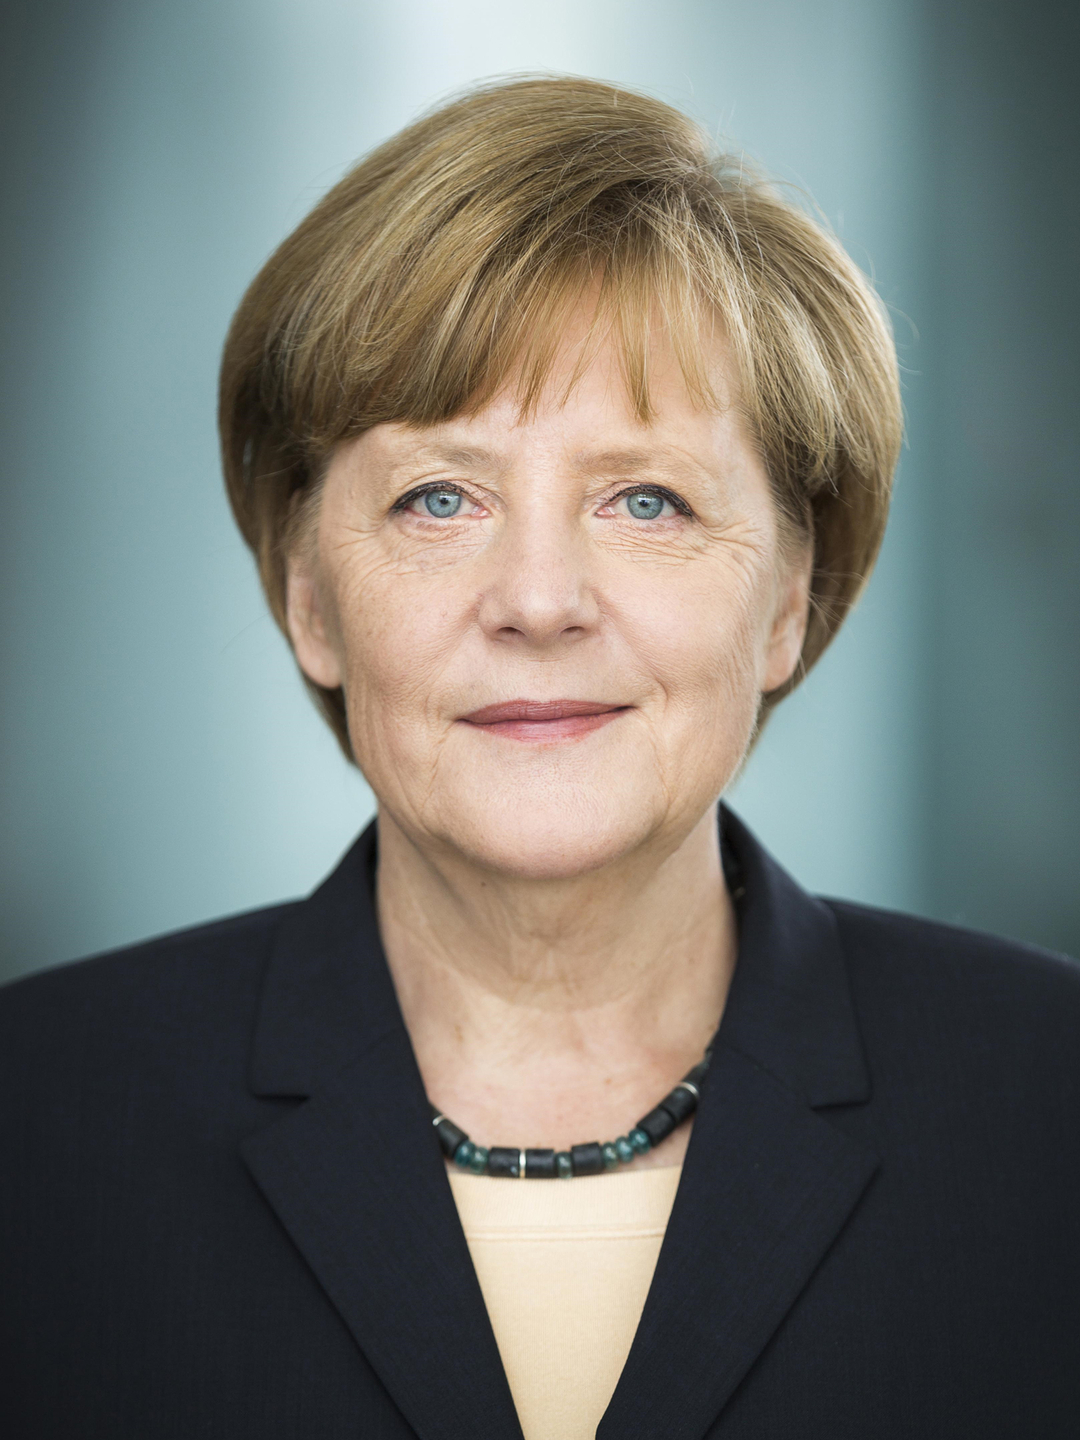 Angela Merkel does she have a husband